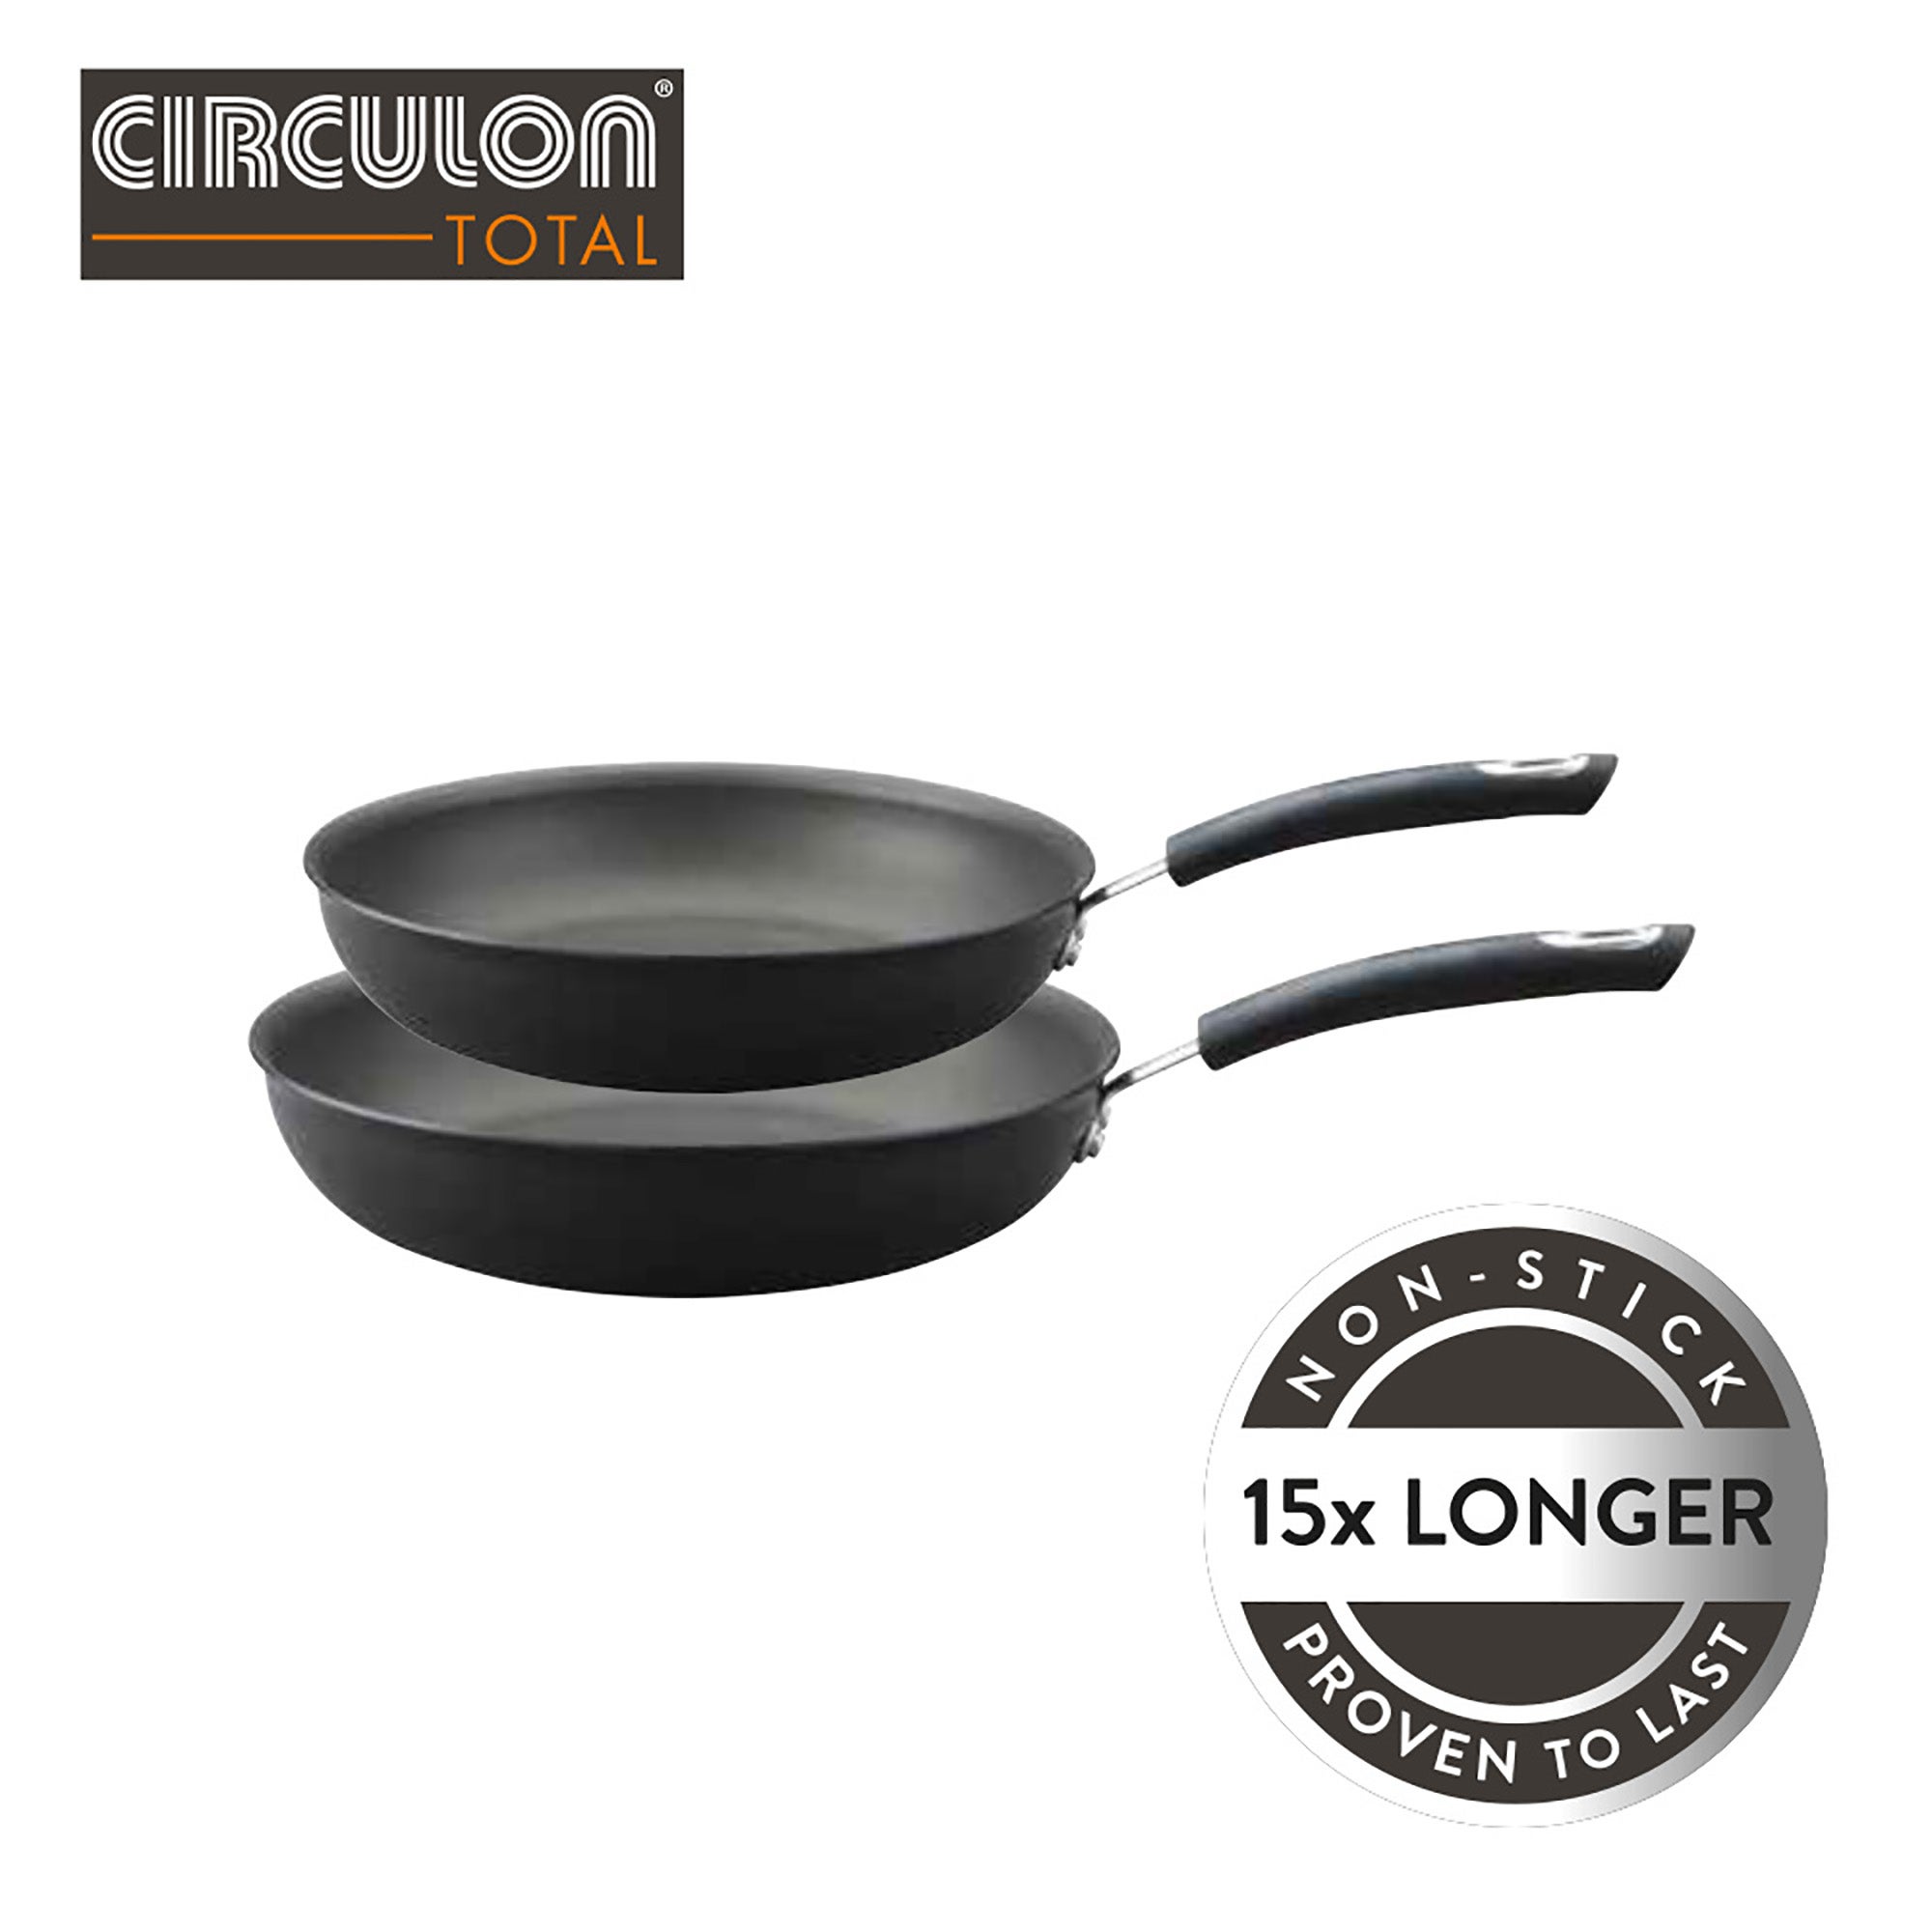 Circulon Total Non-stick Hard Anodised Aluminium Non-stick Induction 2 Piece Frying Pan Set